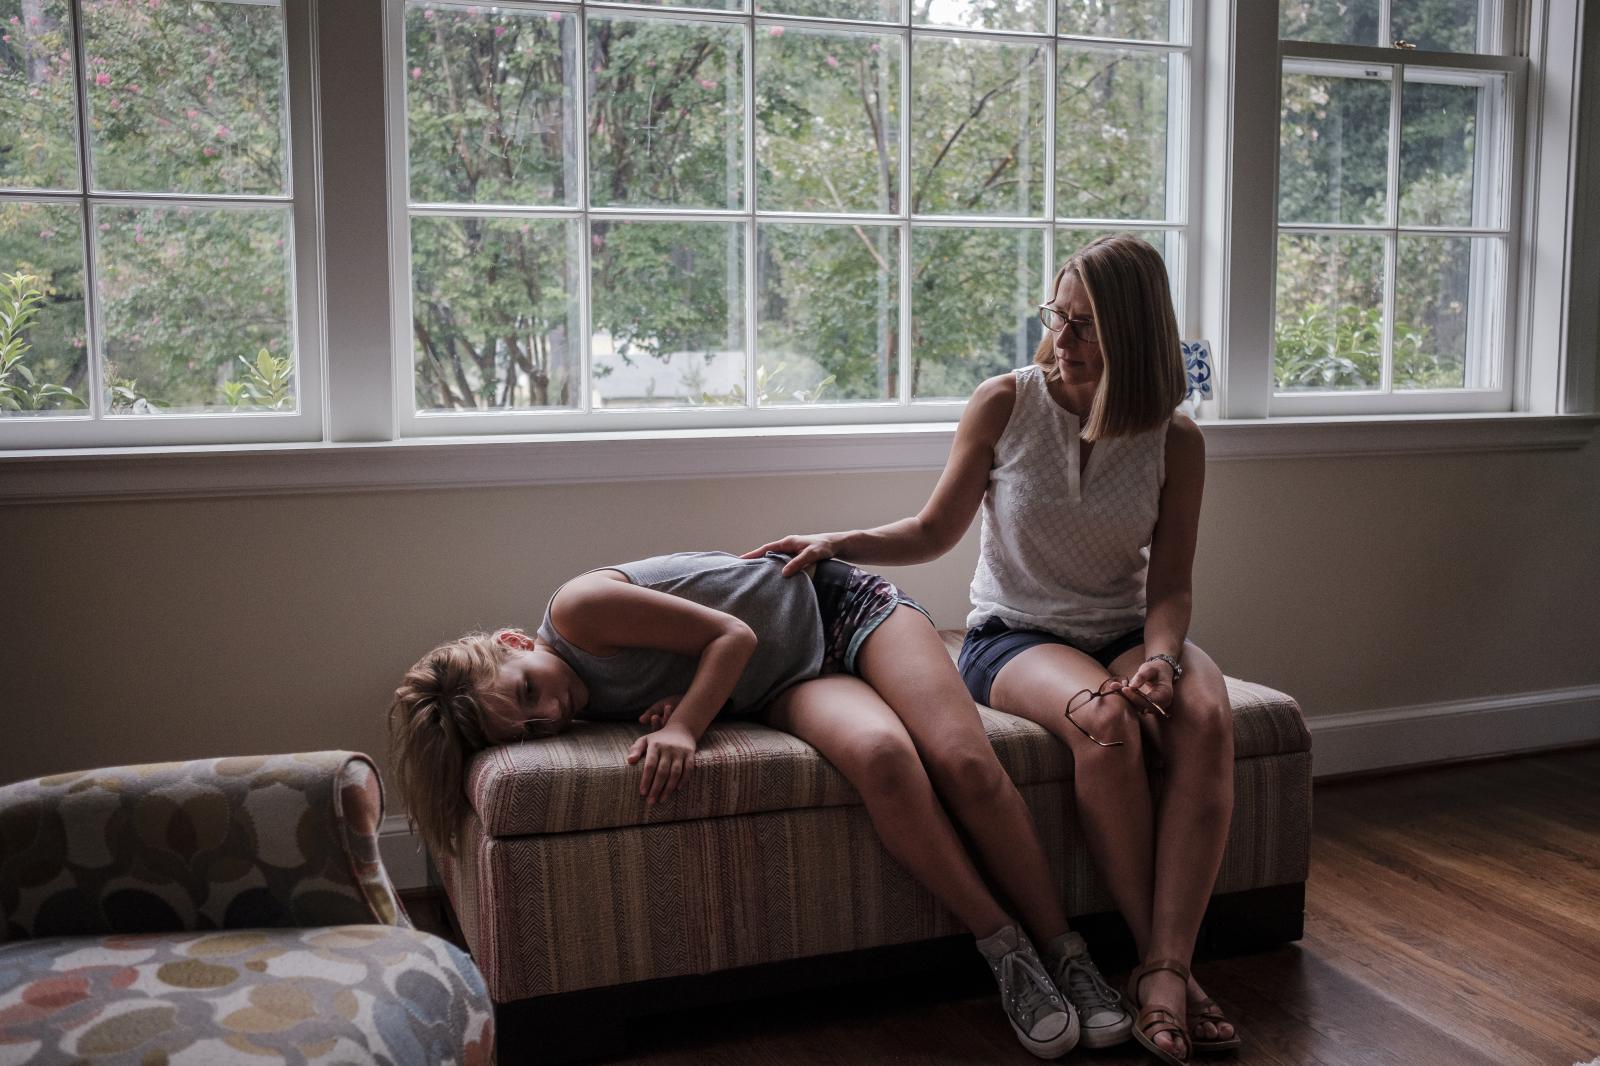 NPR - Jeri Seidman and her daughter Hannah lounging at their...